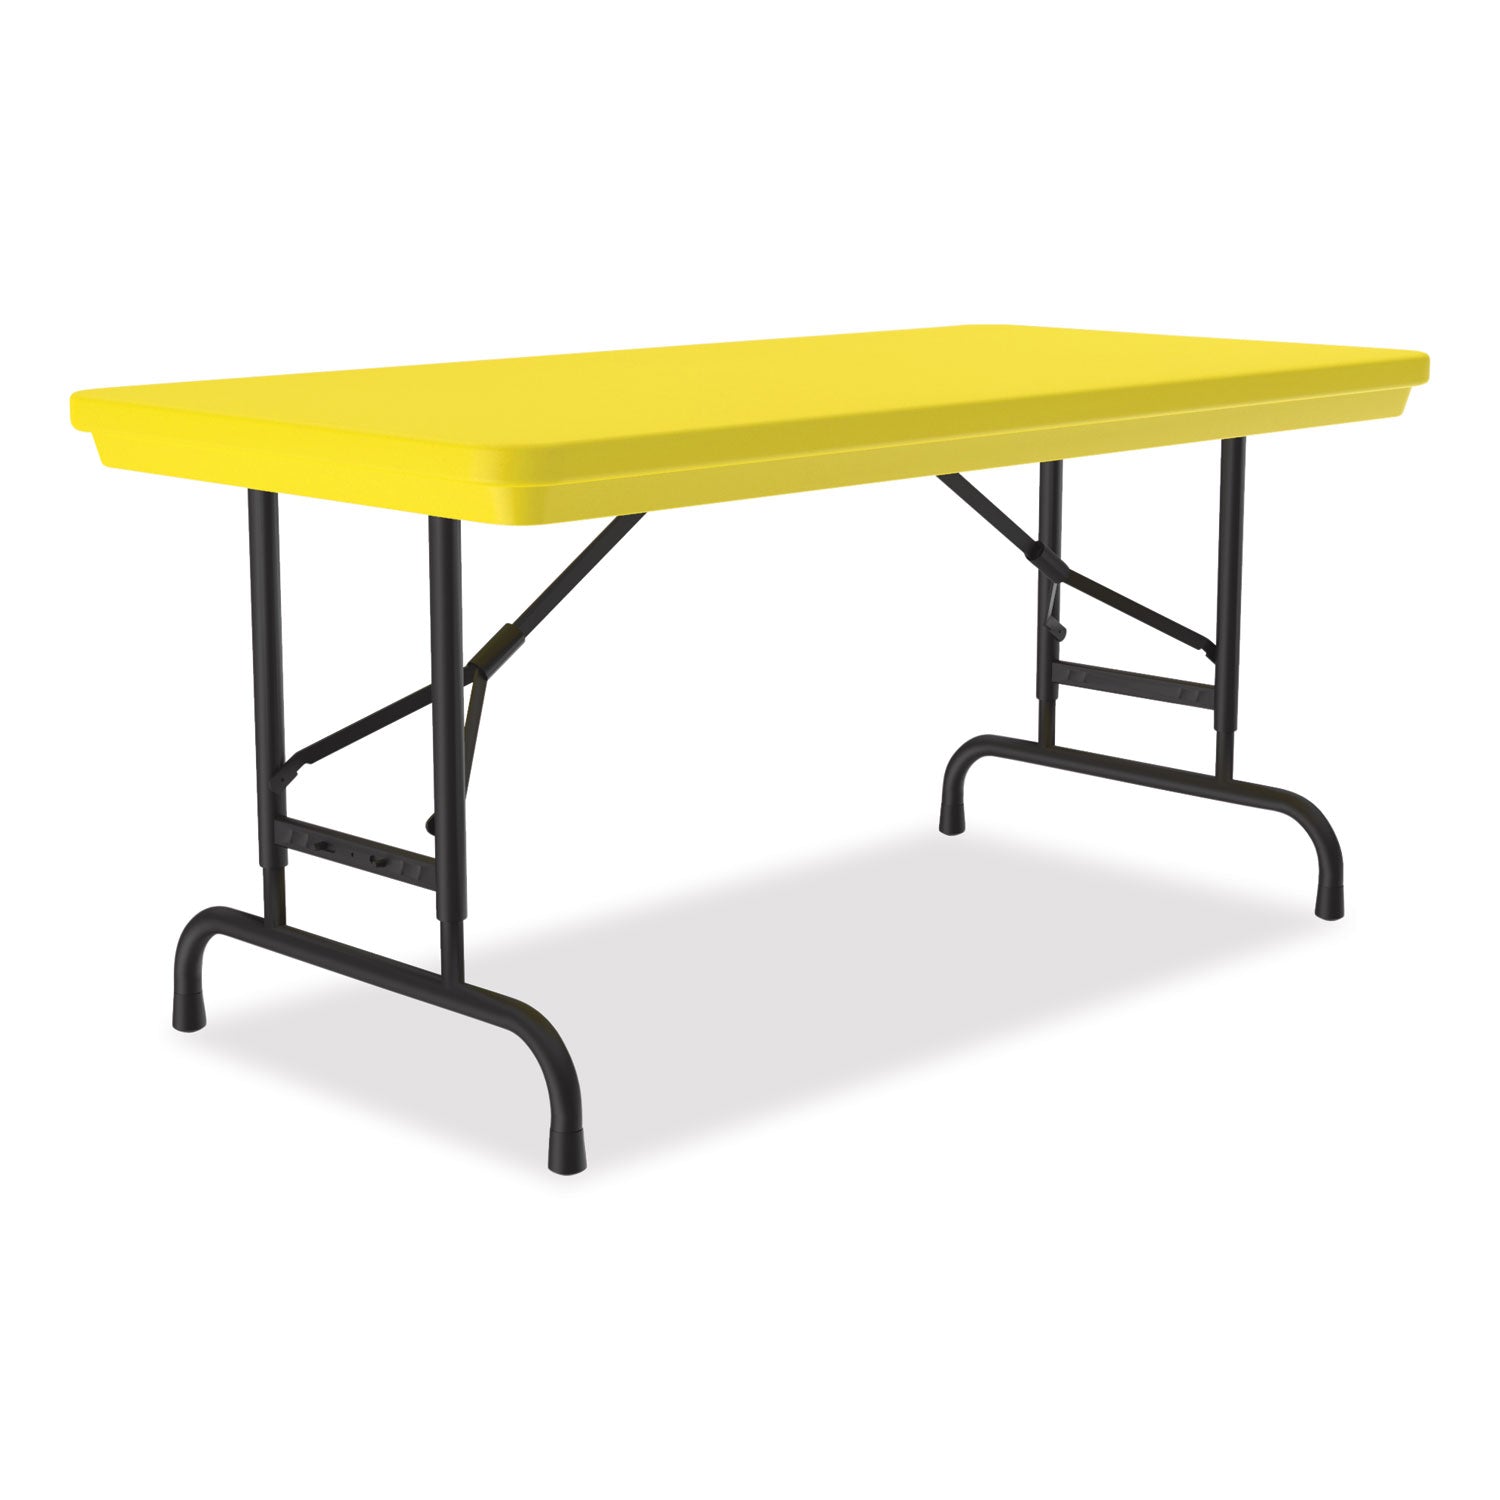 adjustable-folding-table-rectangular-48-x-24-x-22-to-32-yellow-top-black-legs-4-pallet-ships-in-4-6-business-days_crlra2448284p - 3